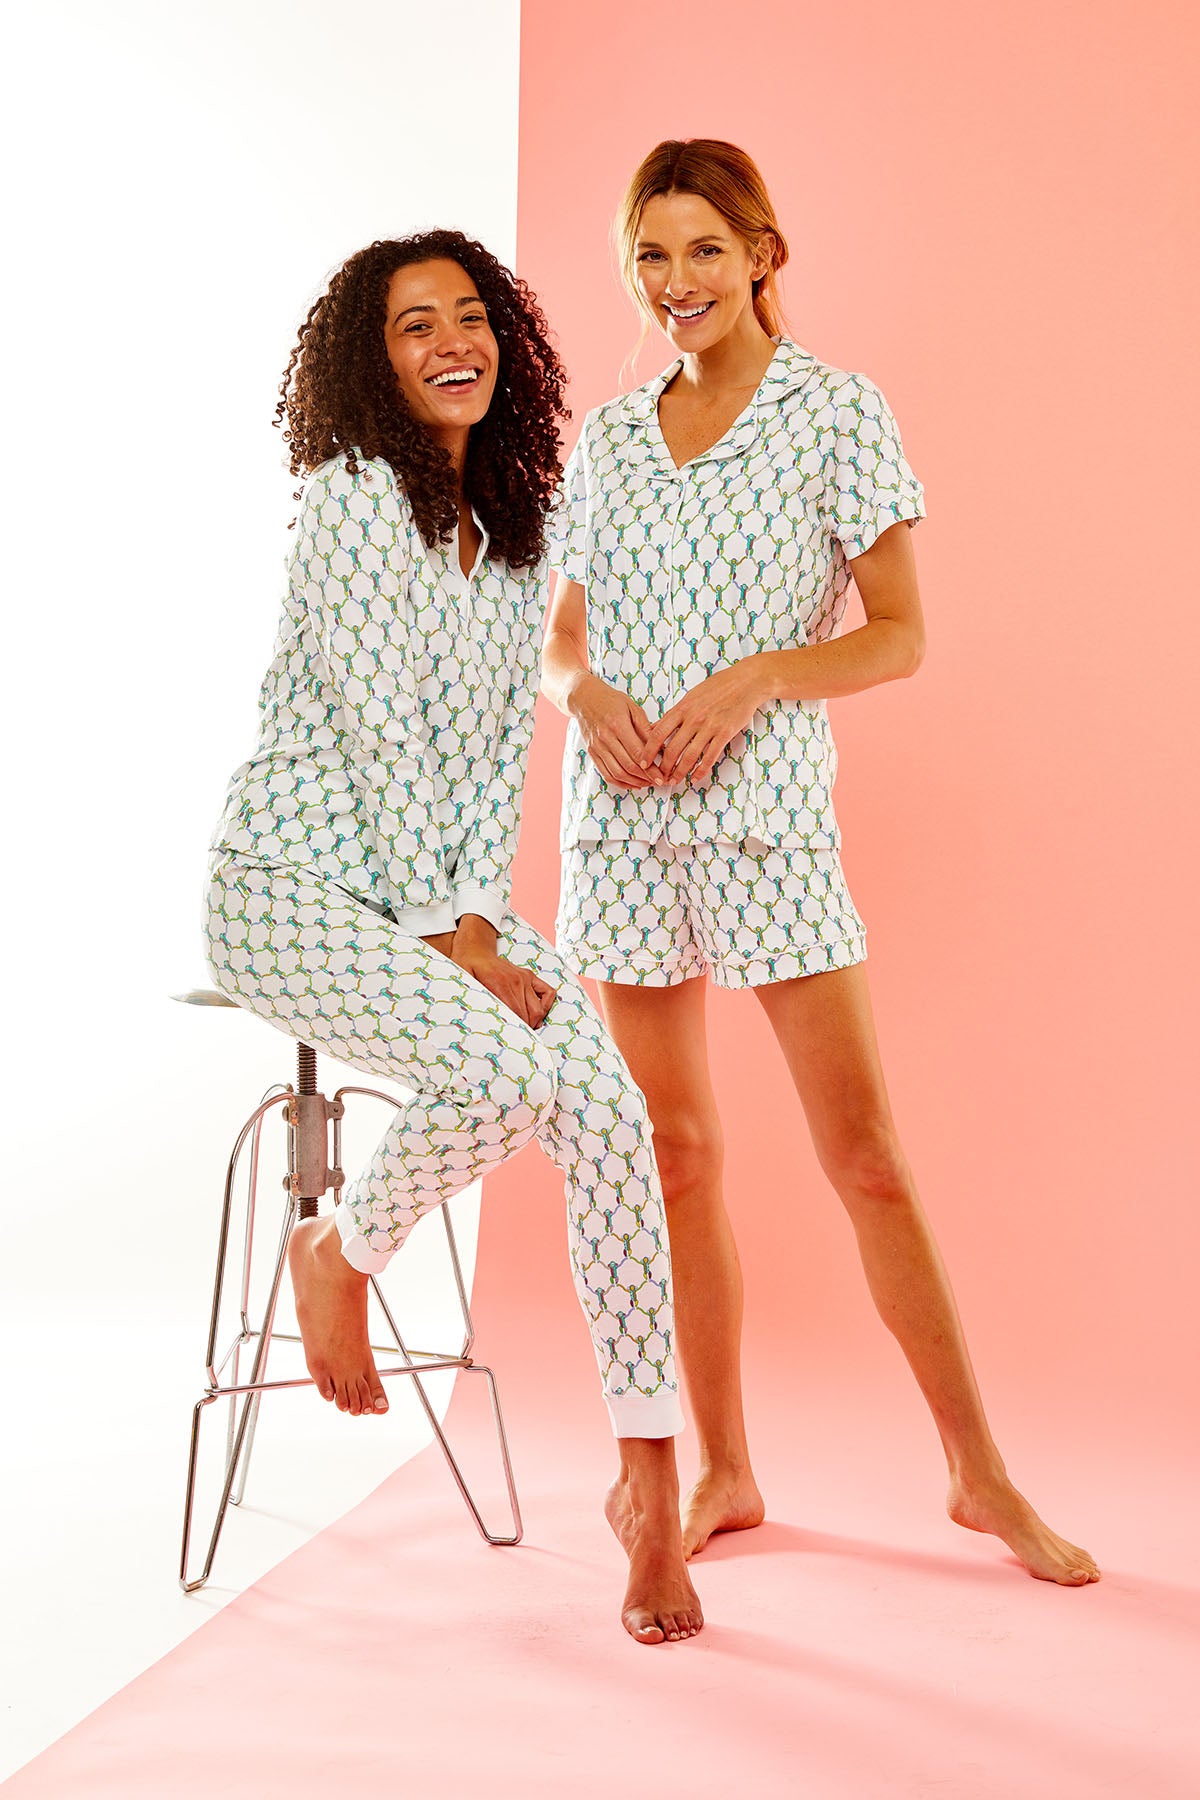 Women in pajamas